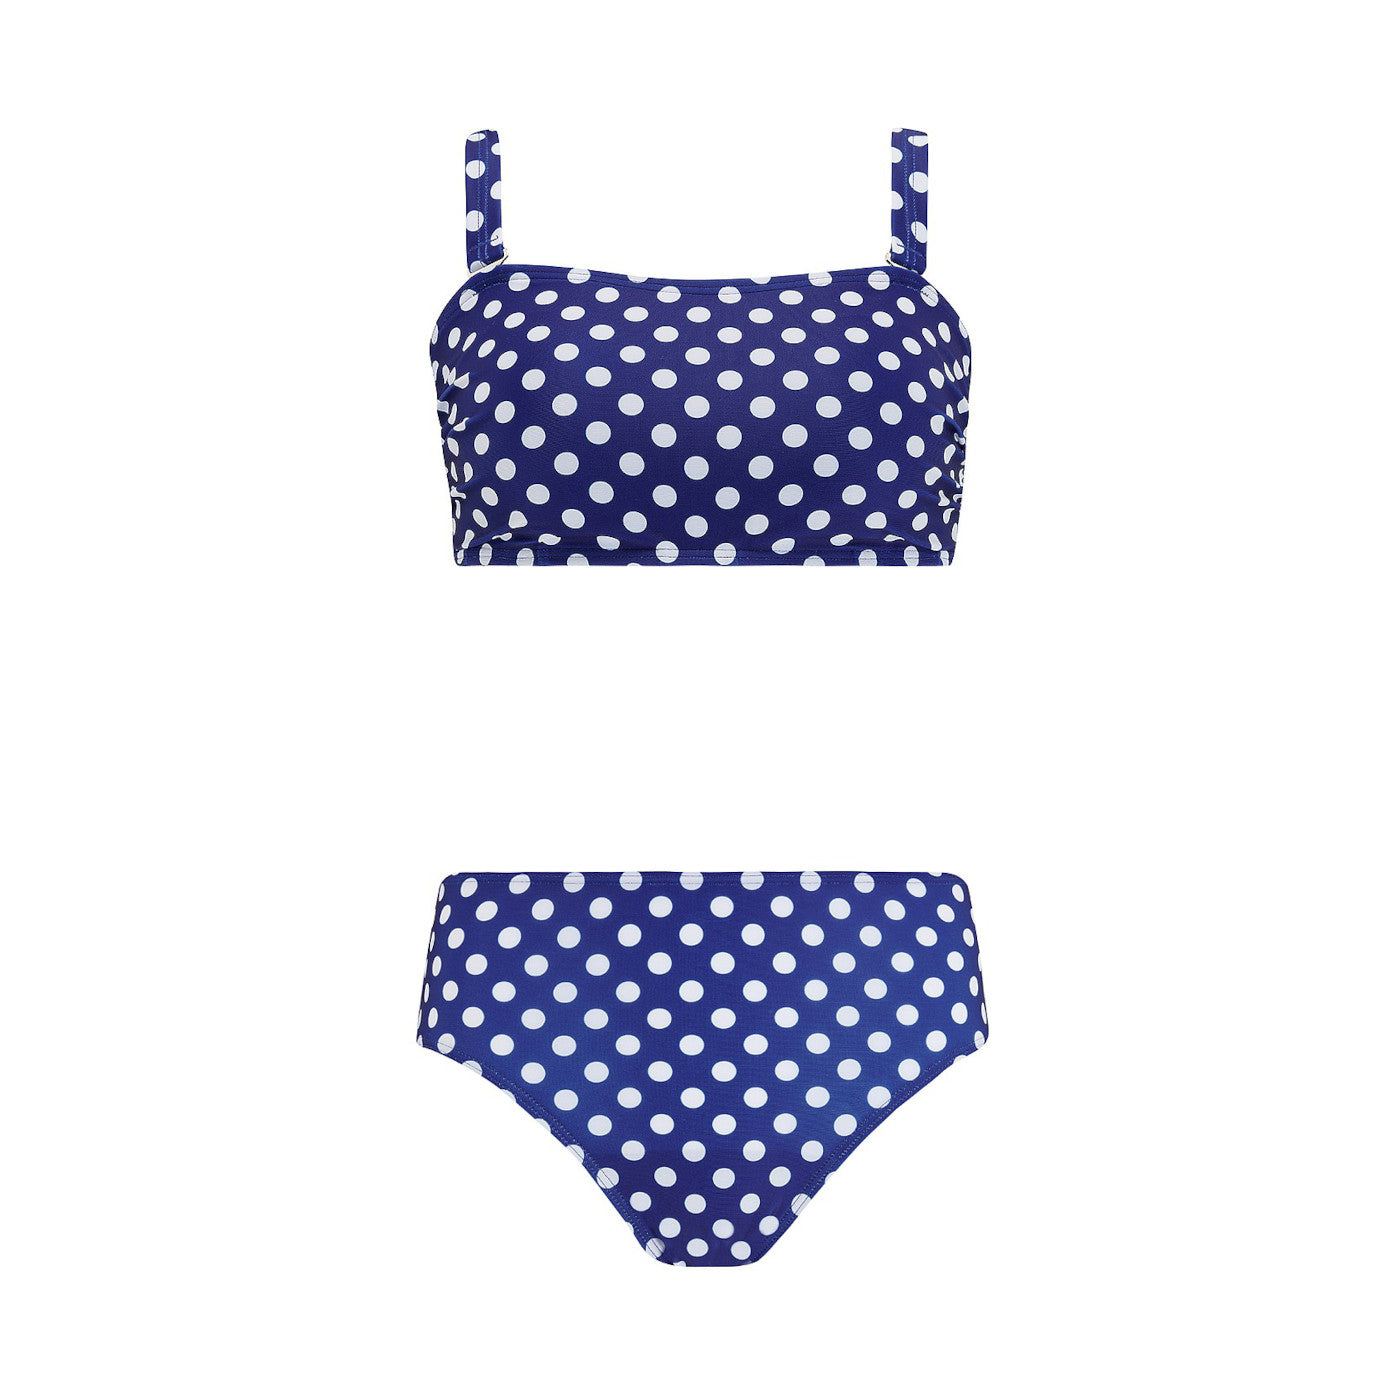 Monte Carlo Bandeau Bikini | Swimwear from Nicola Jane | Pocketed mastectomy swimwear for women touched by breast cancer